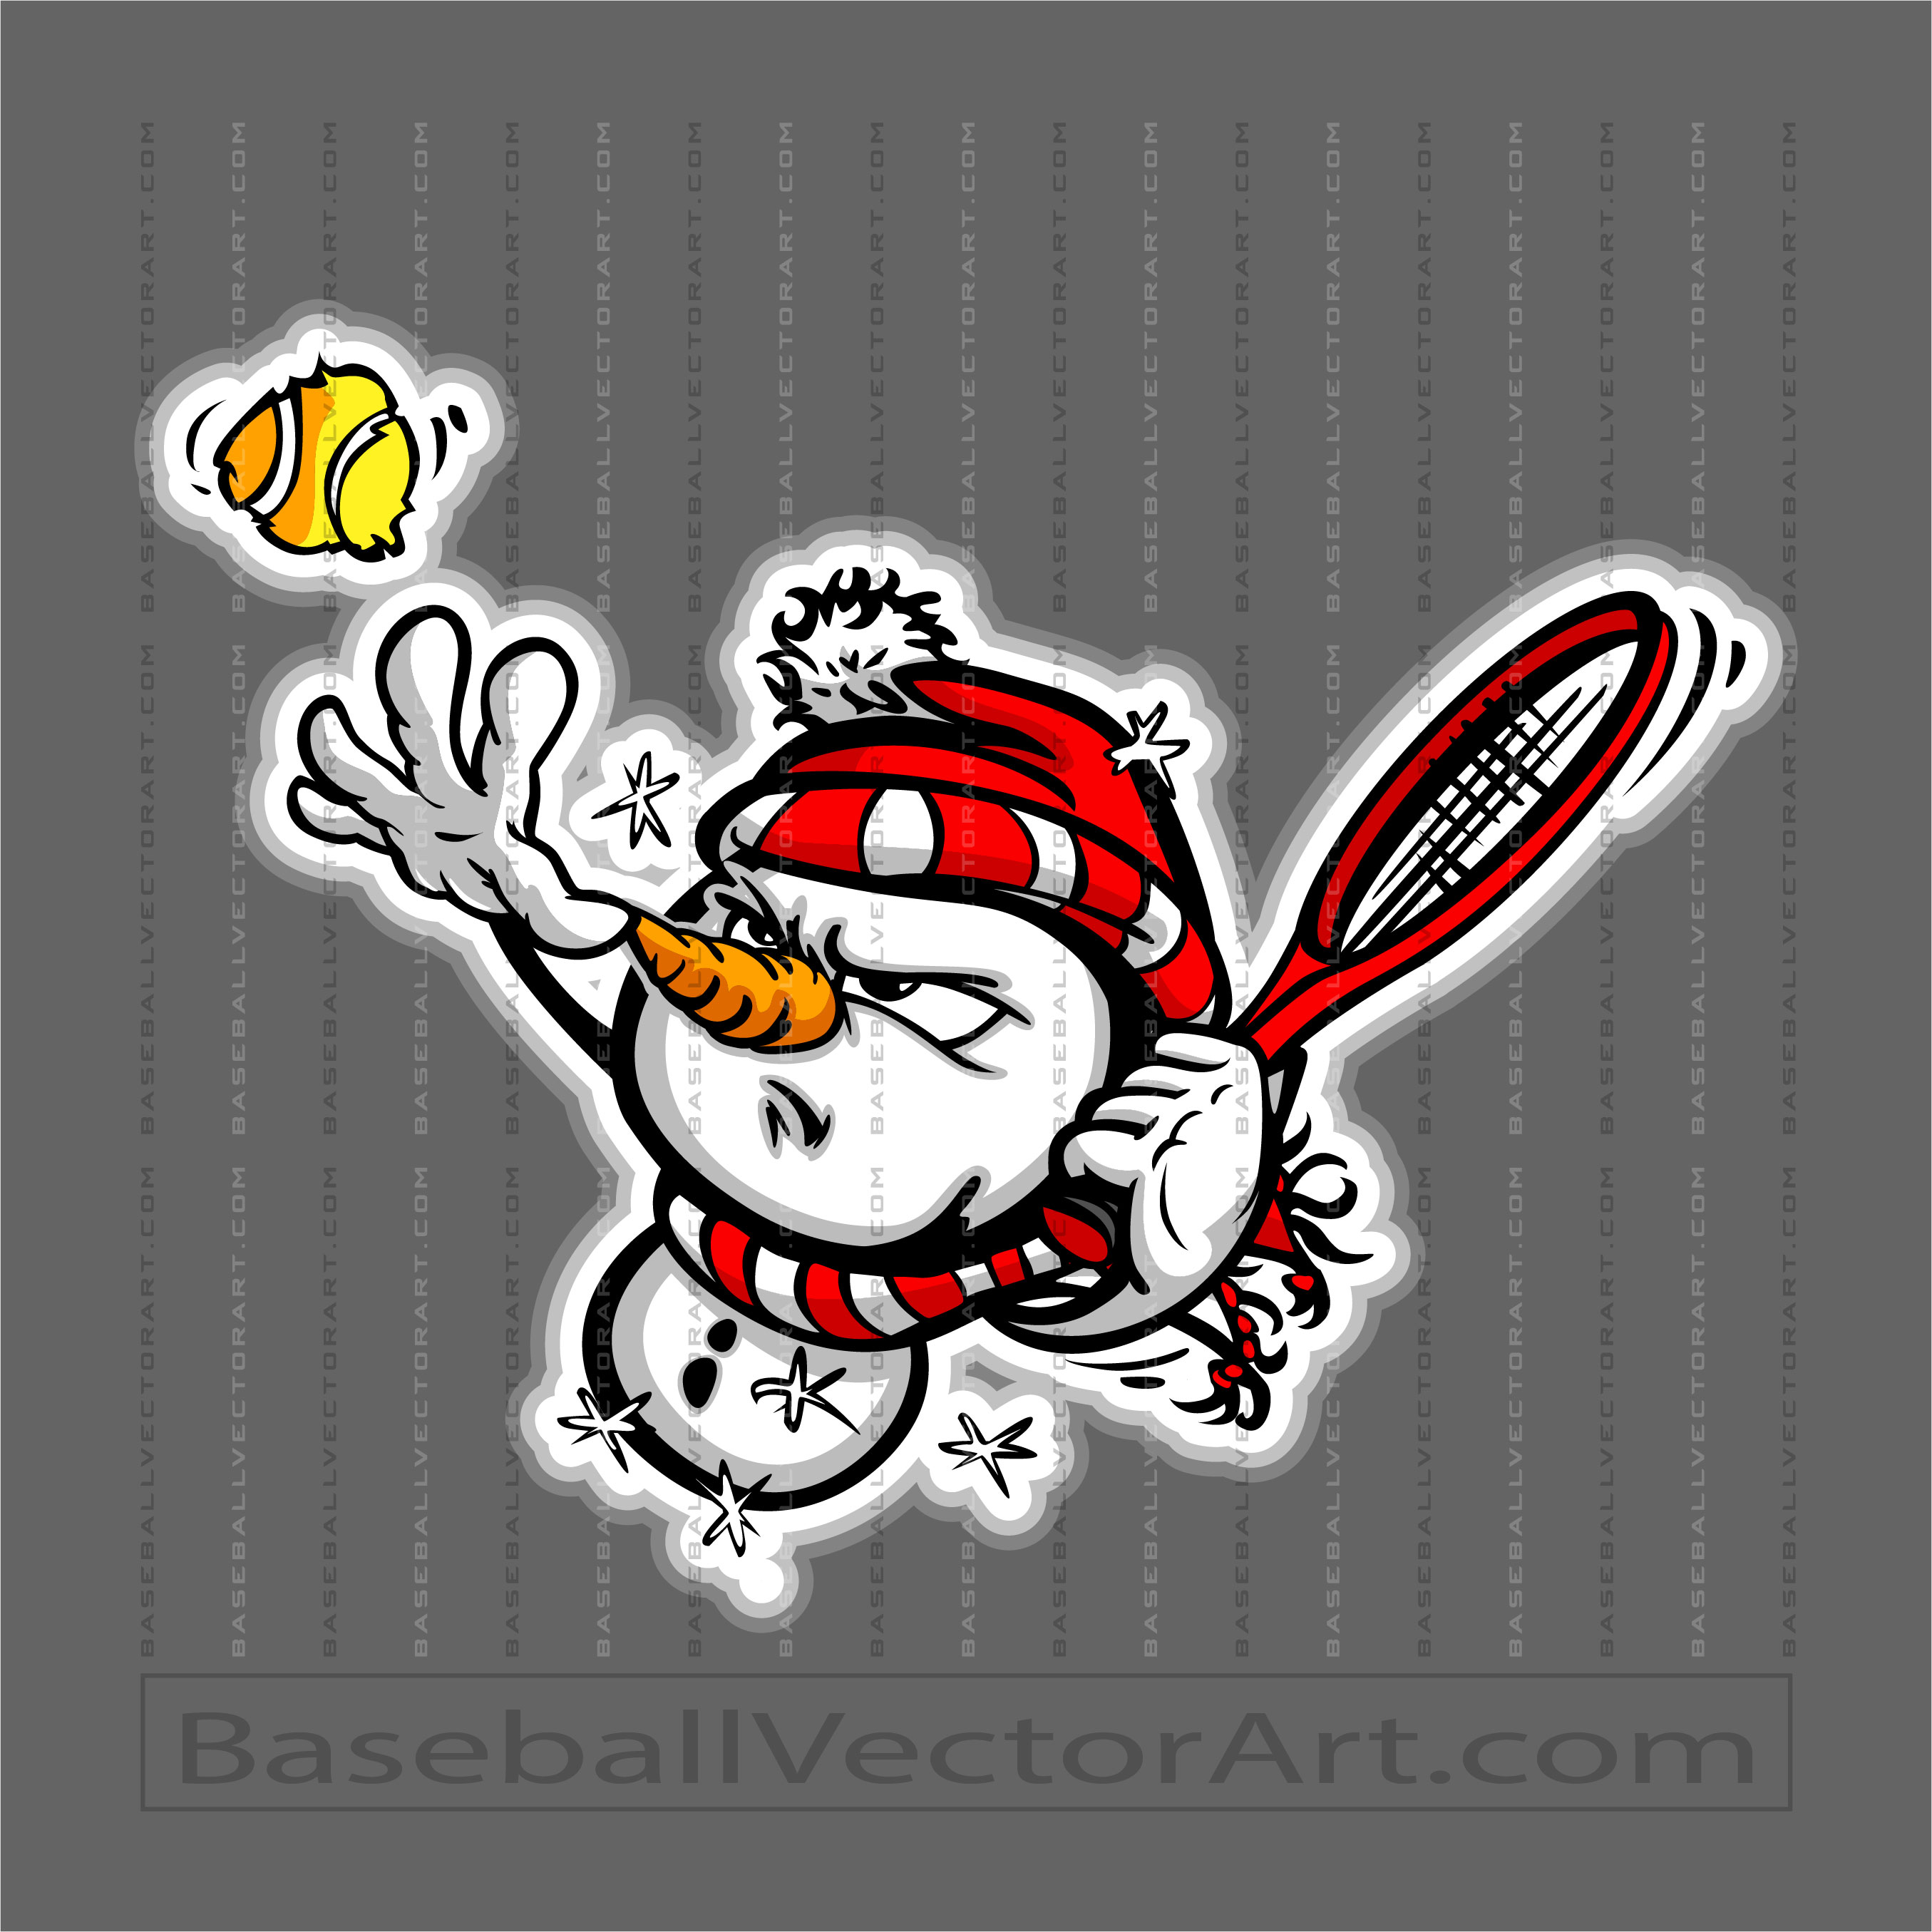 Tennis Snowman Vector Image